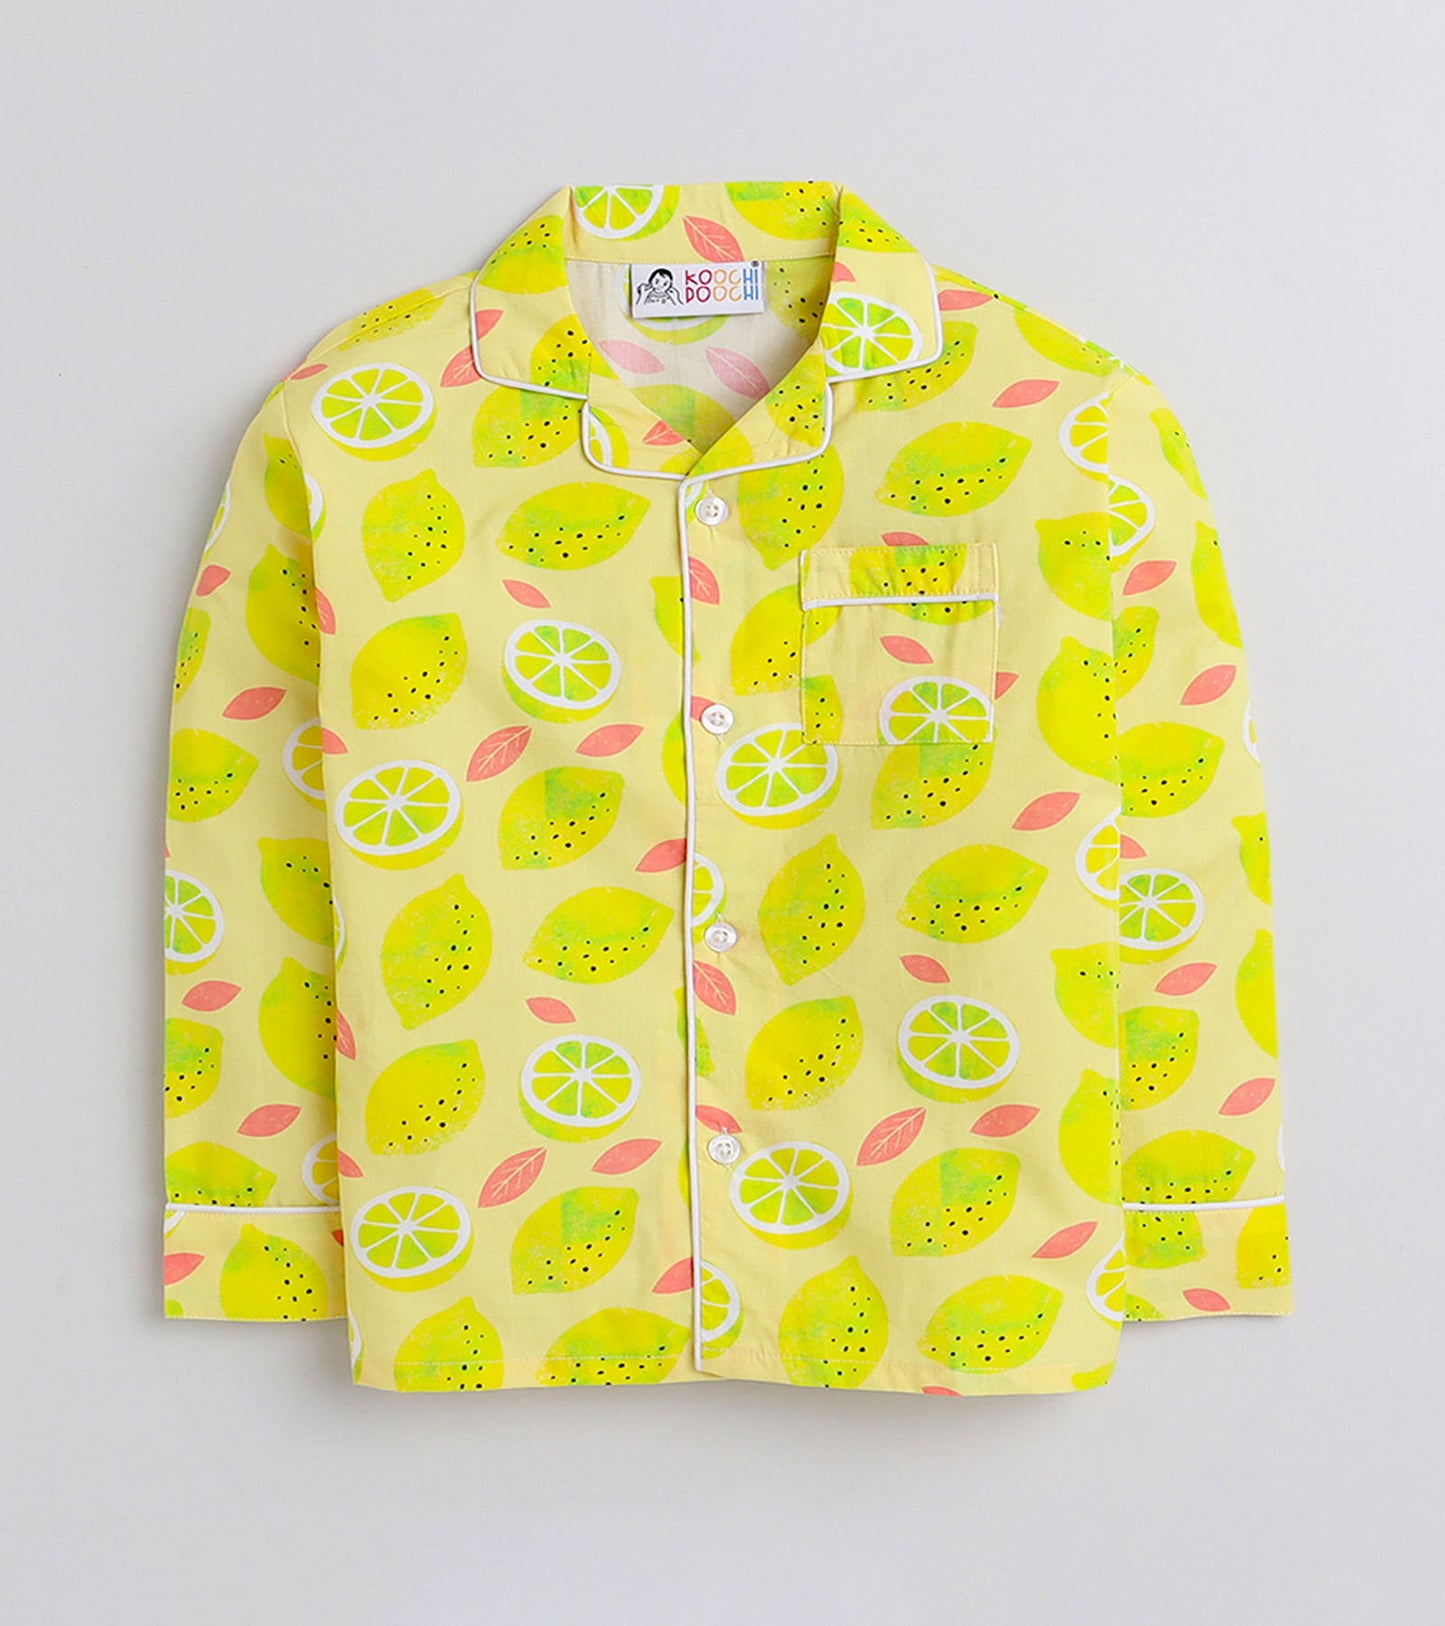 Sunshine  Lemon  Printed Night Suit Set